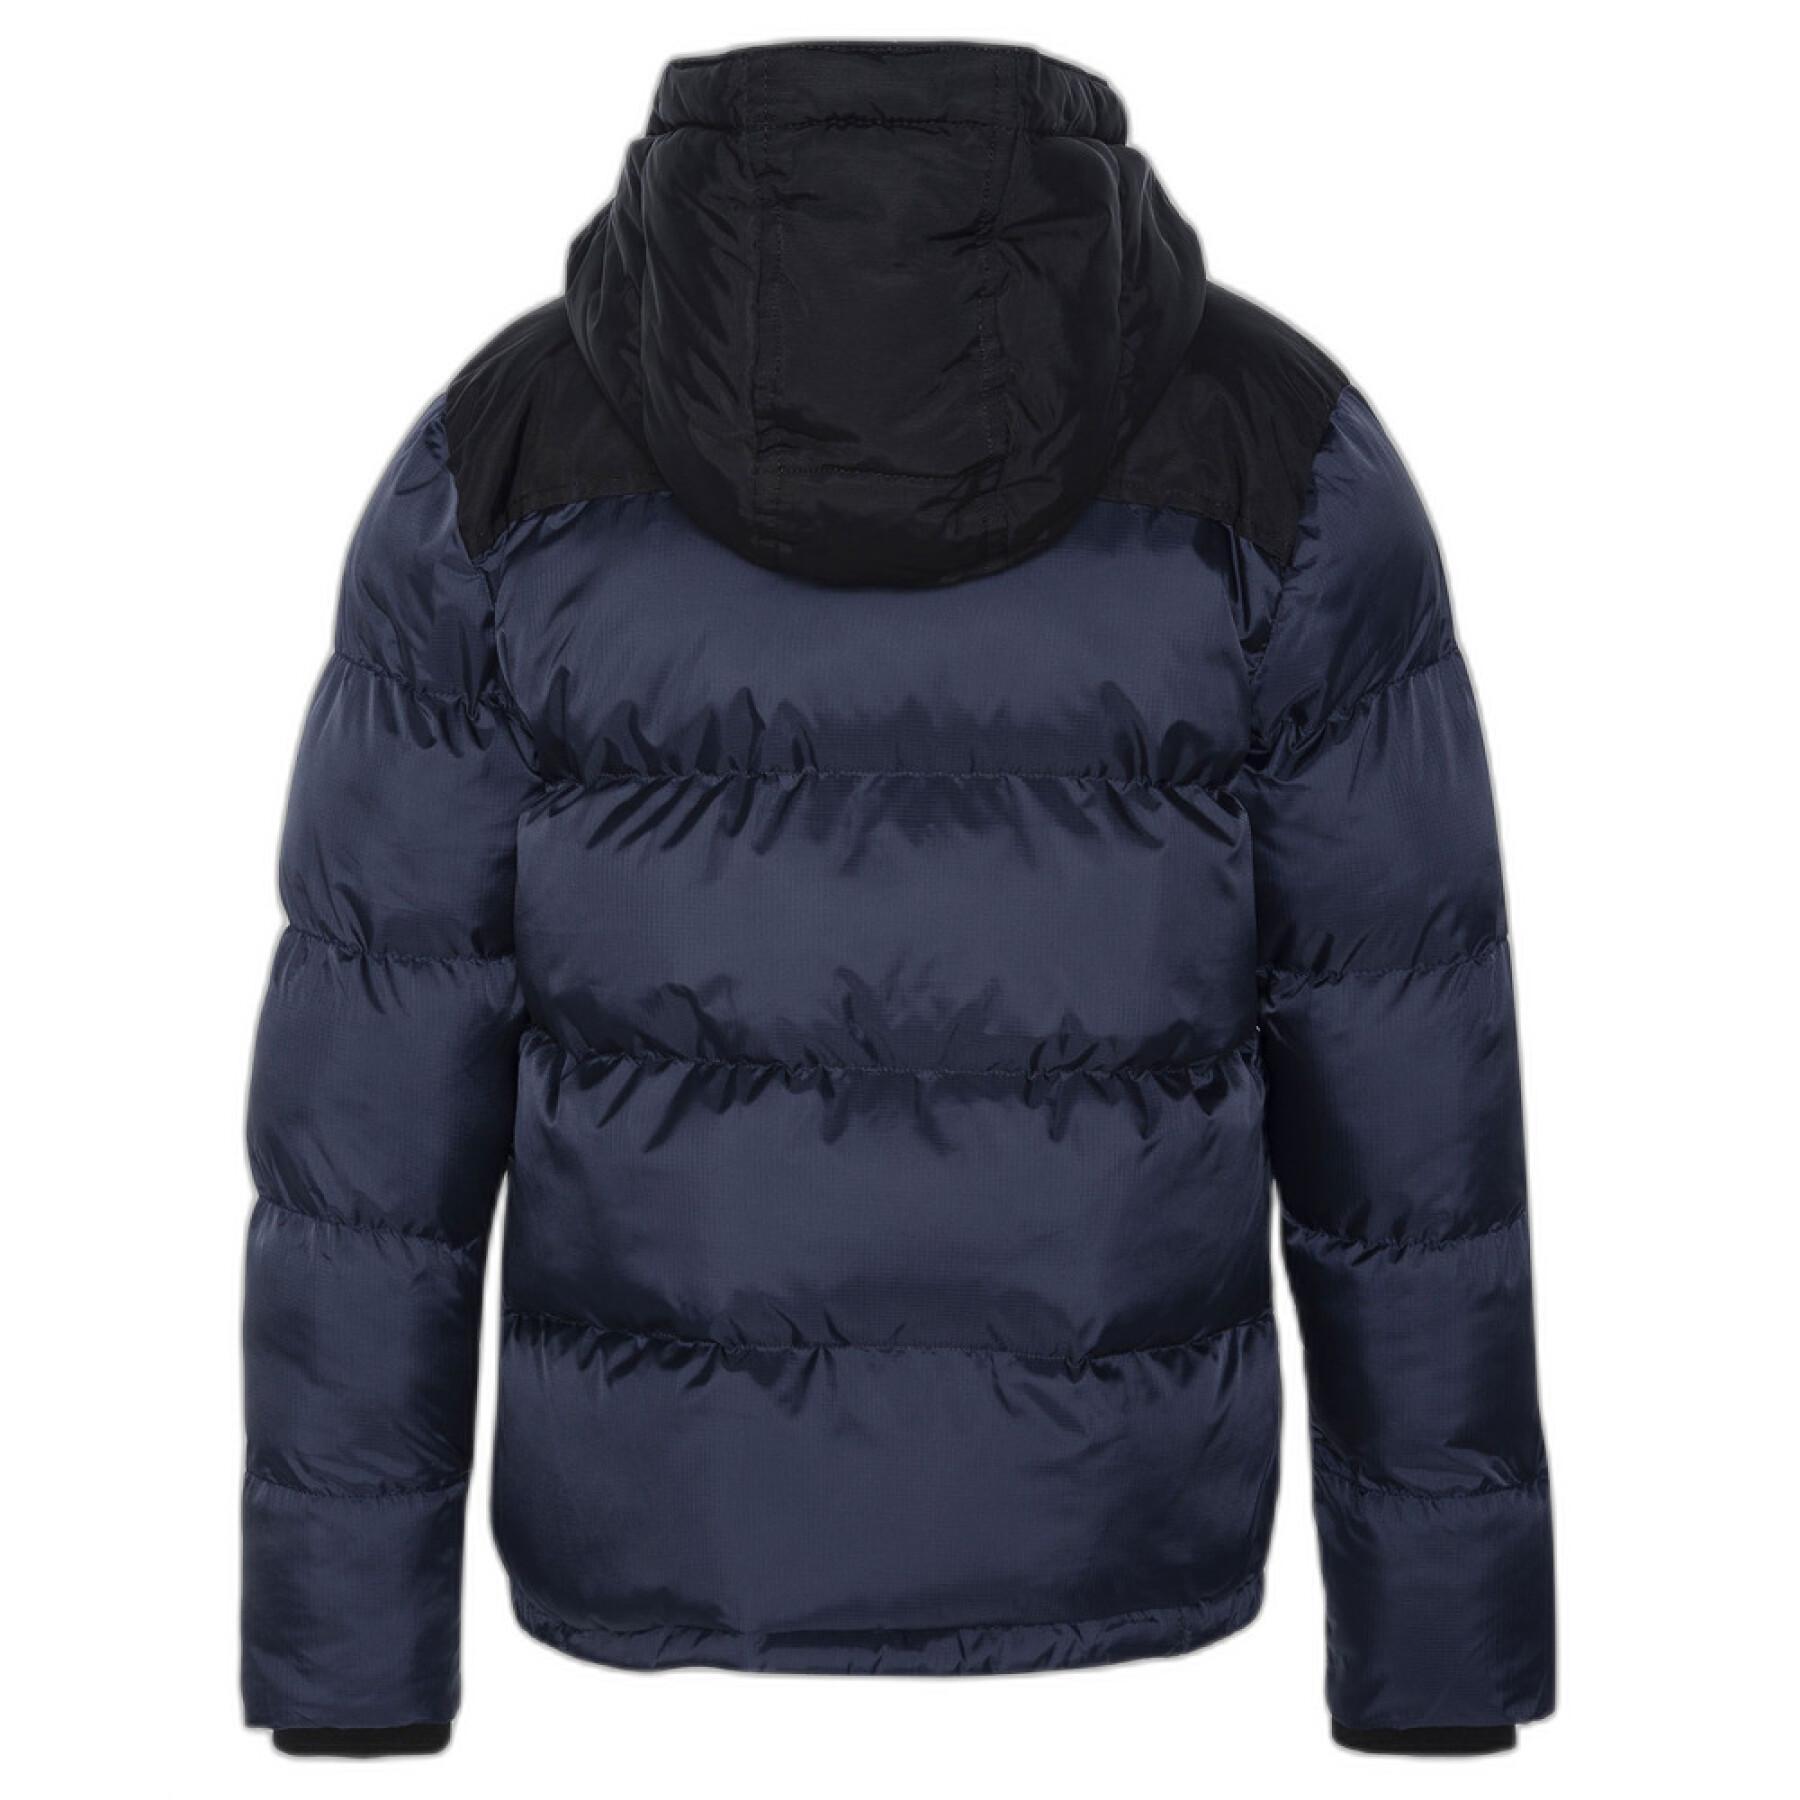 Child hooded jacket Schott